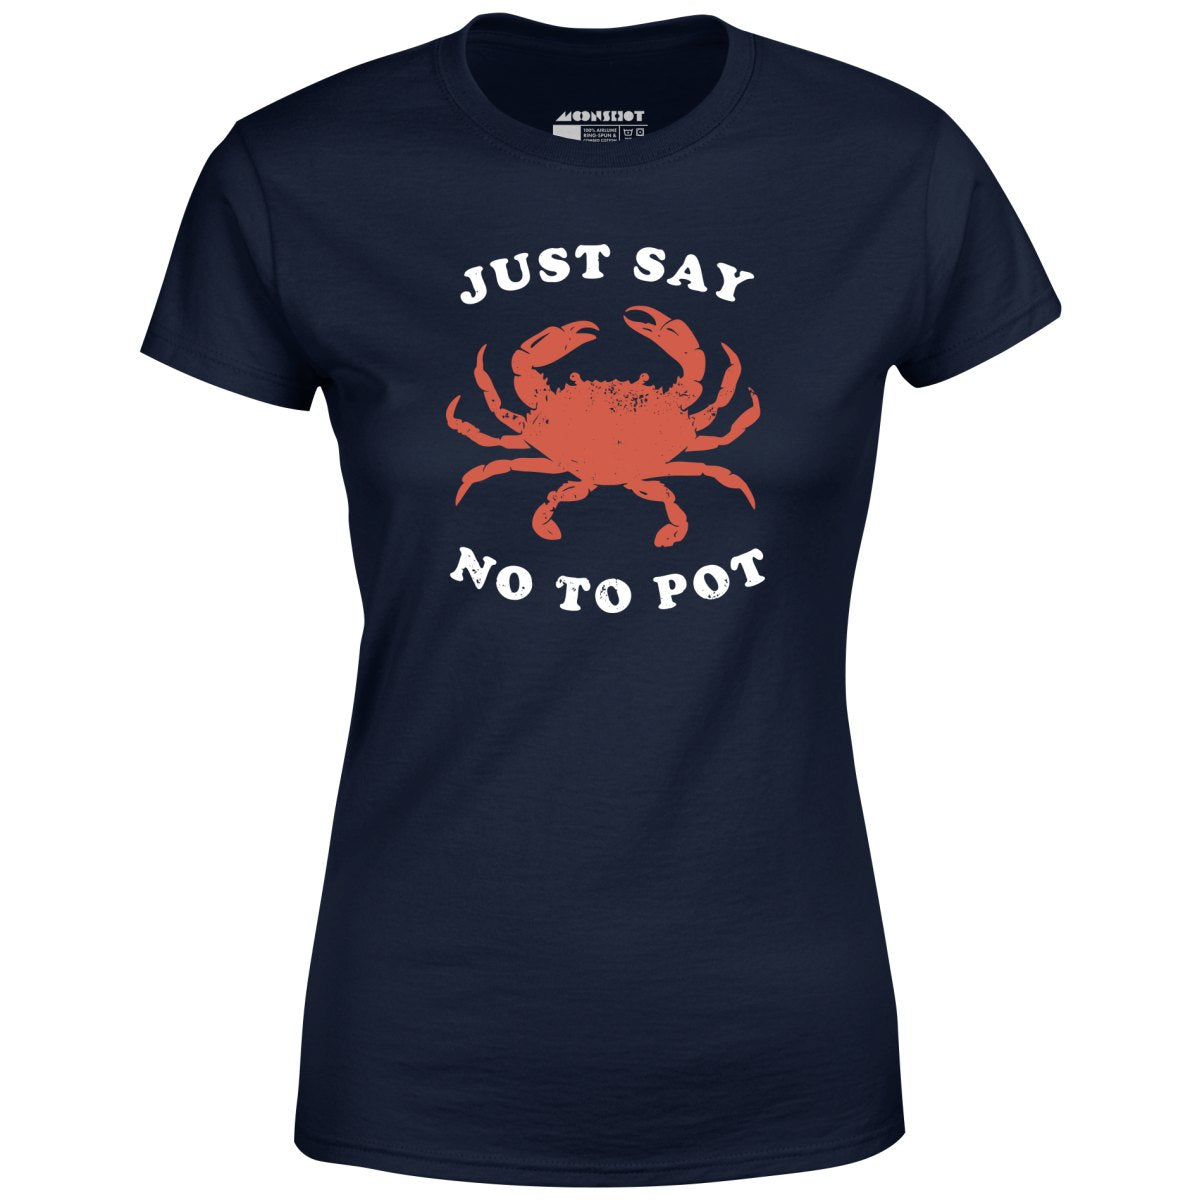 Just Say No To Pot - Women's T-Shirt